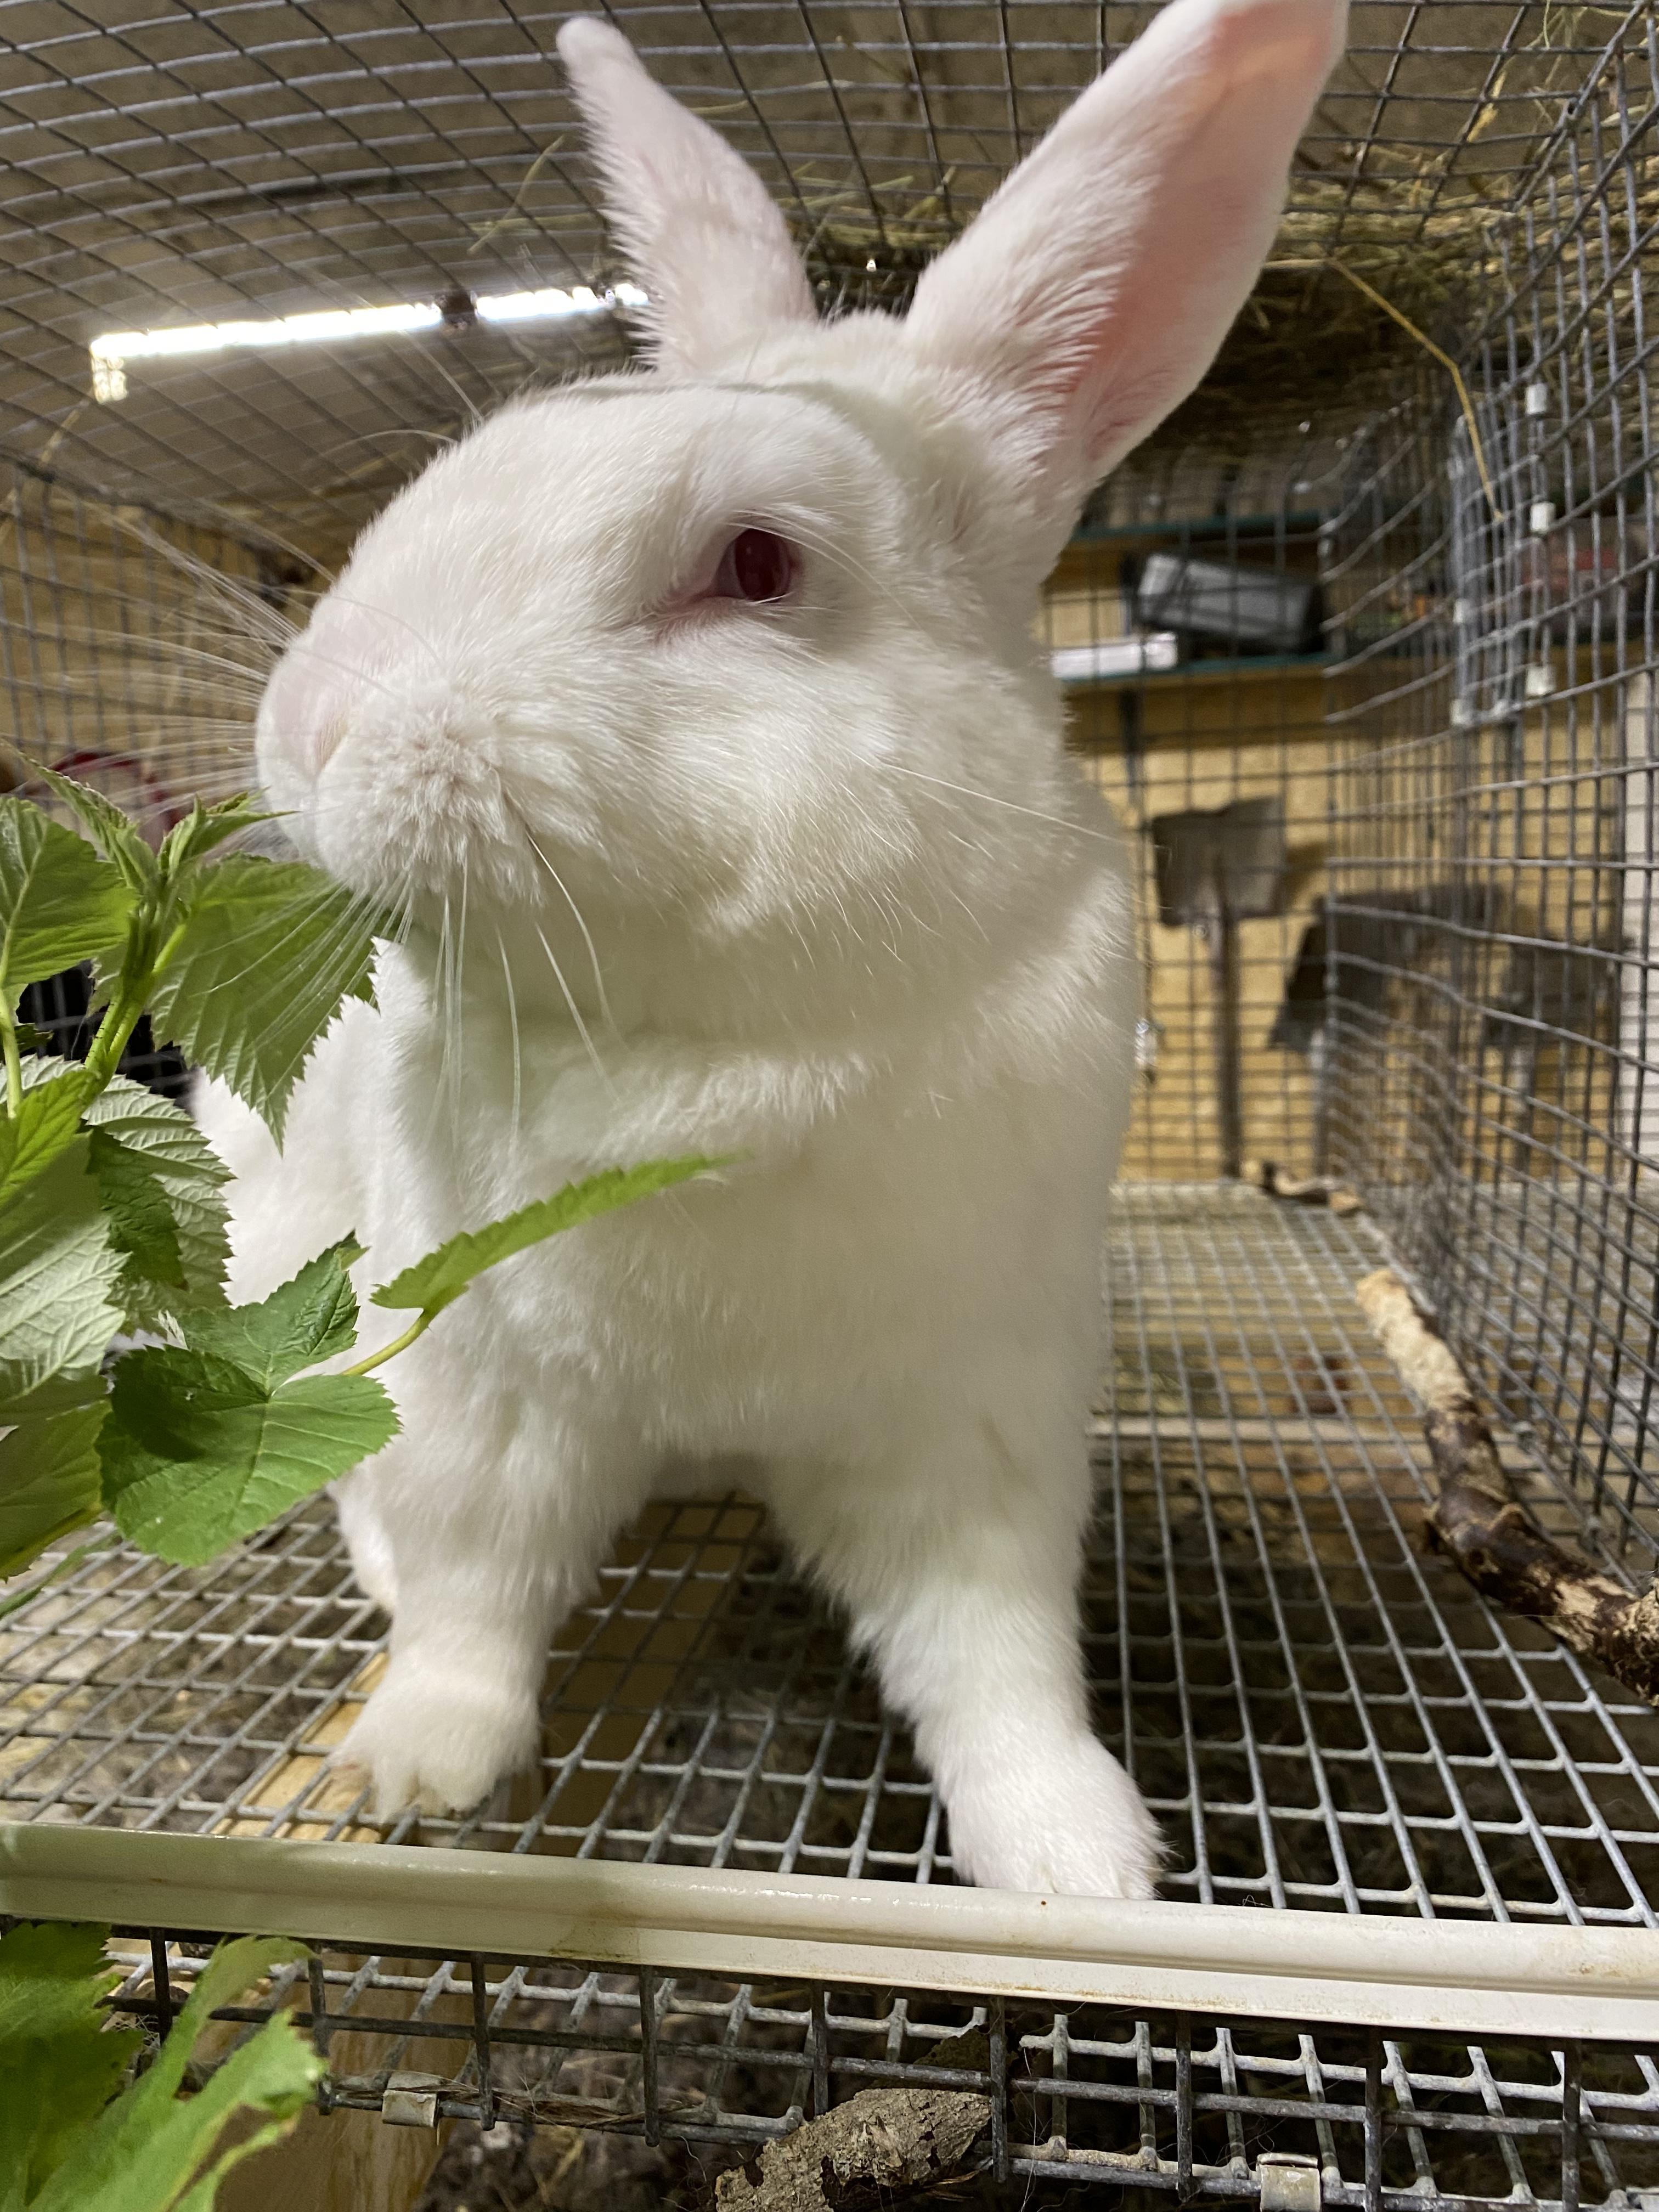 NZ white rabbit eating some greens